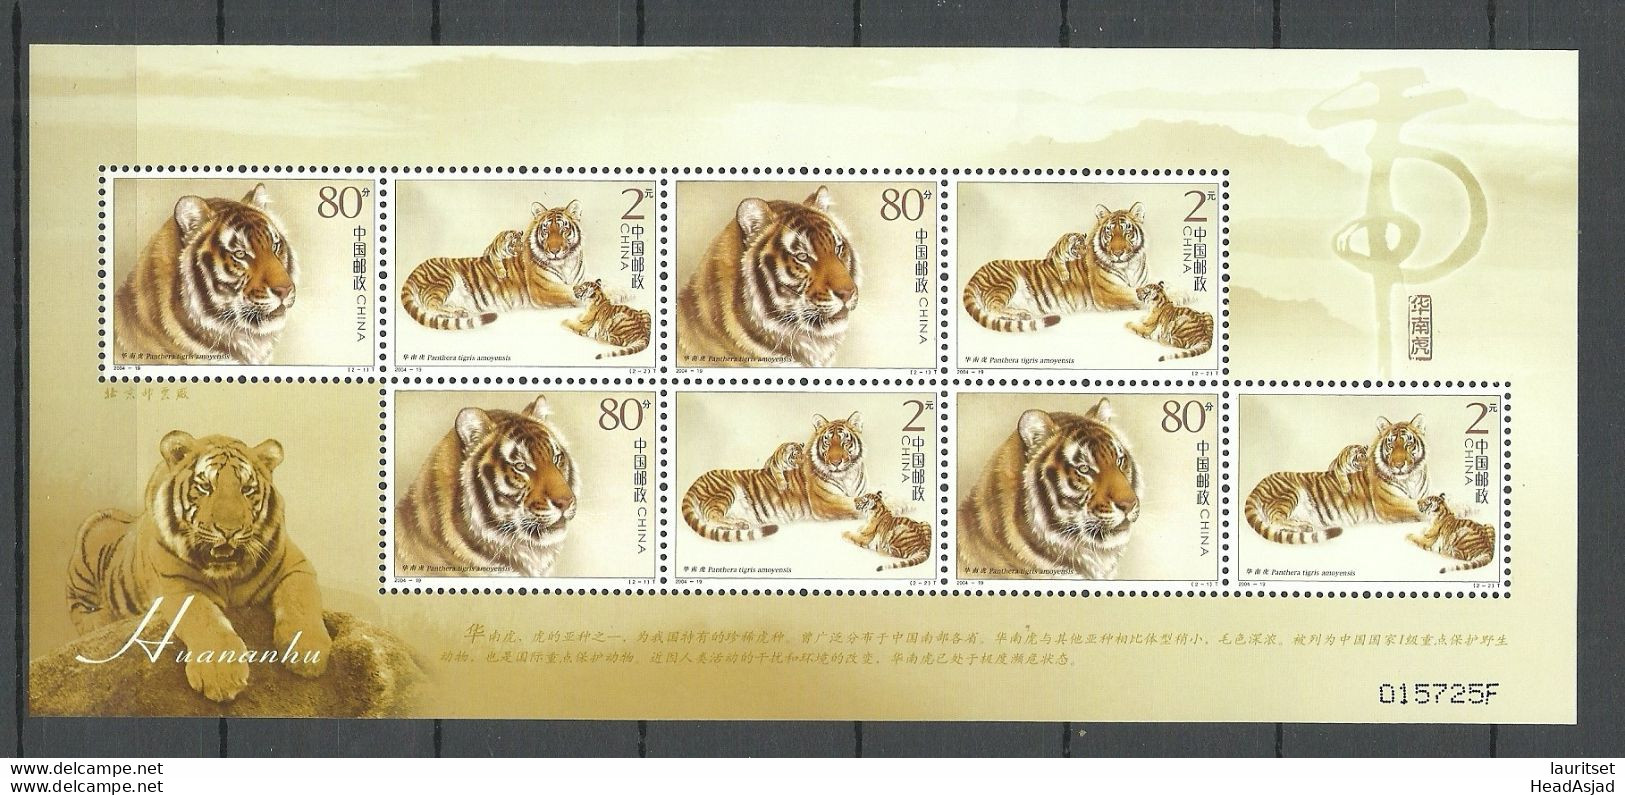 CHINA 2004 Tiger Sheetlet Kleinbogen MNH - Raubkatzen